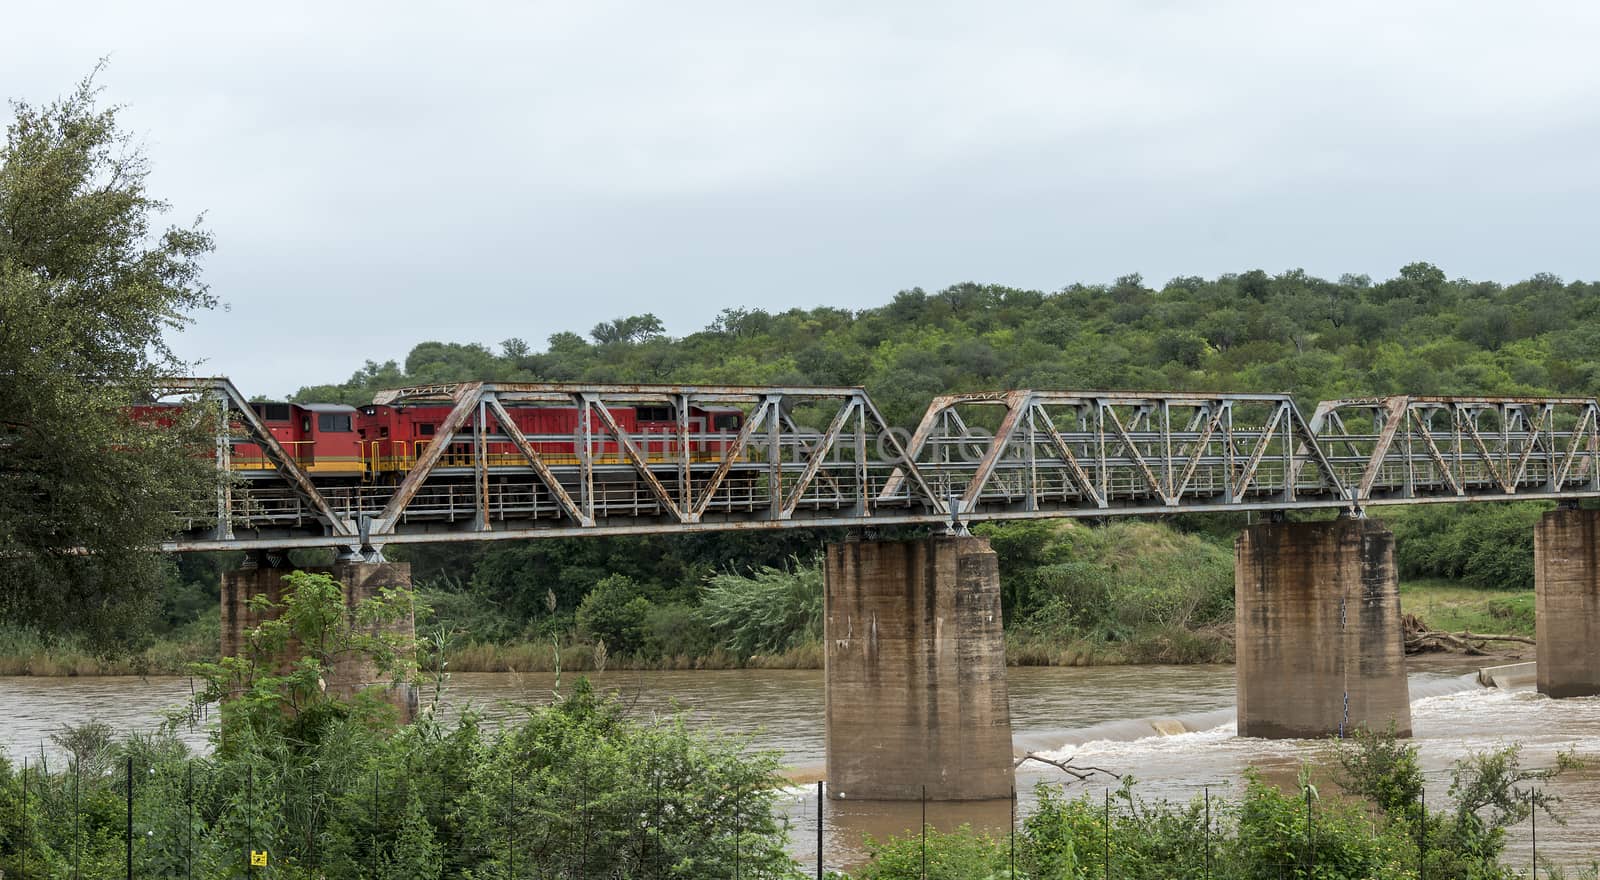 train crossing bridge over elephant riverin south africa near the palce hoedspruit